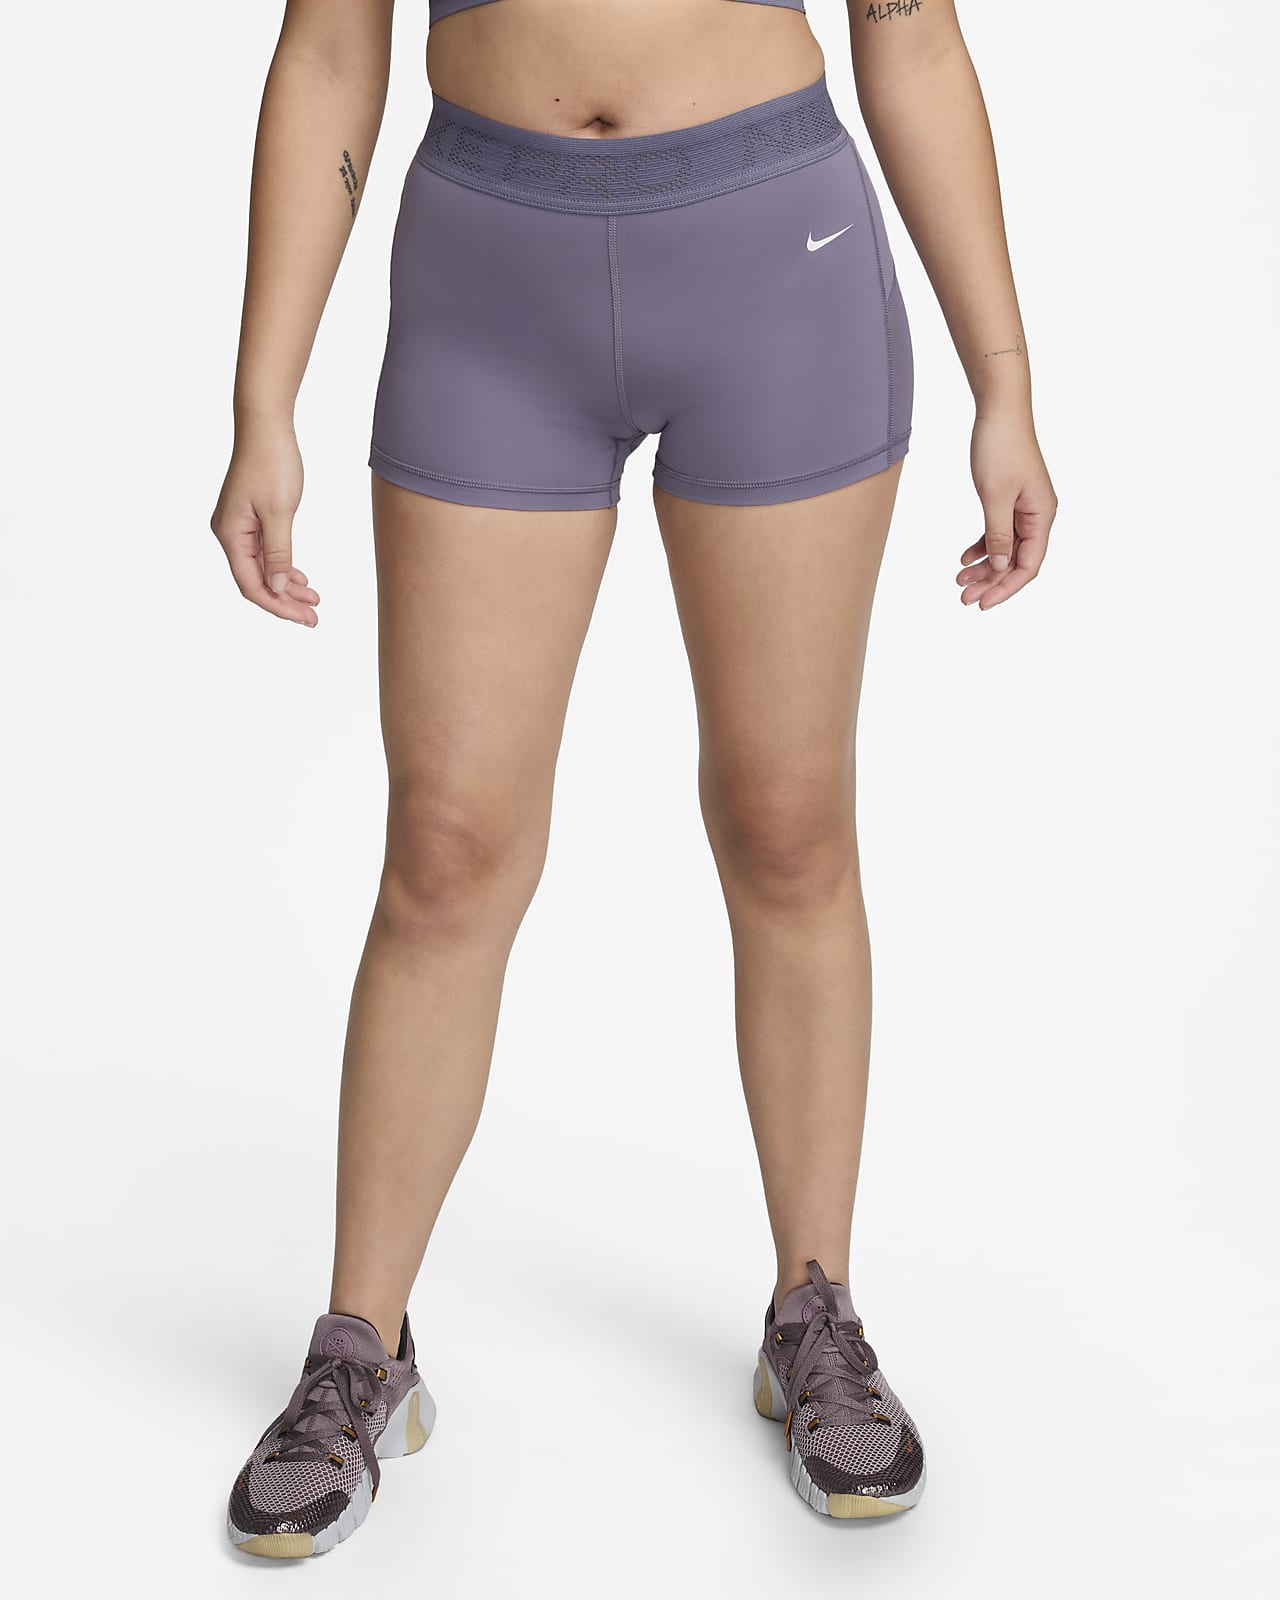 Women's Shorts. Nike IL